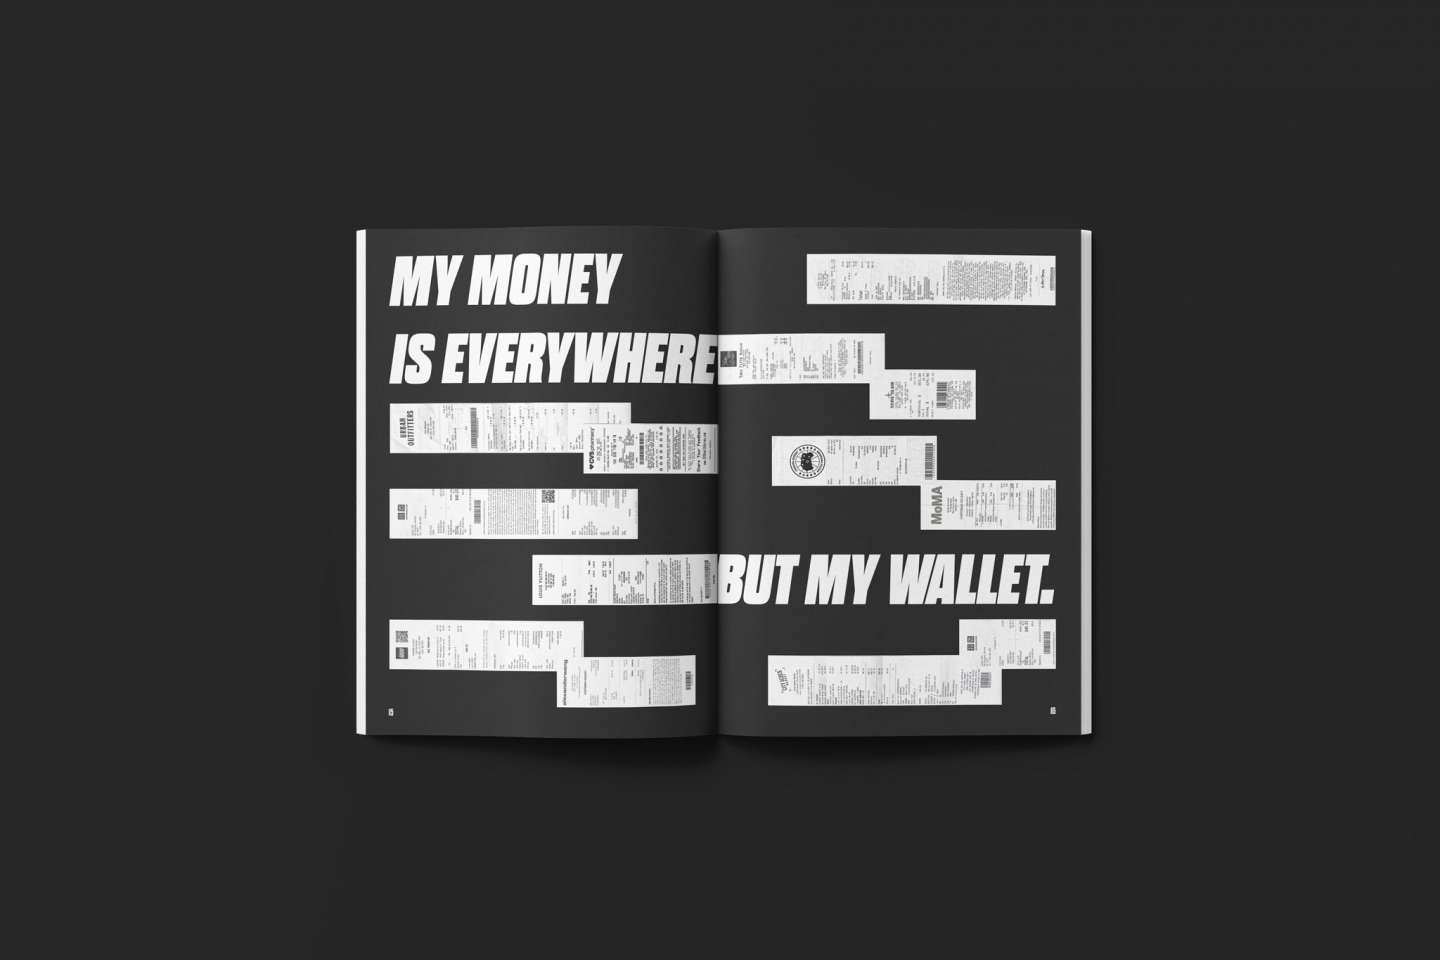 RECEIPT BOOK "WHERE DID MY MONEY GO"